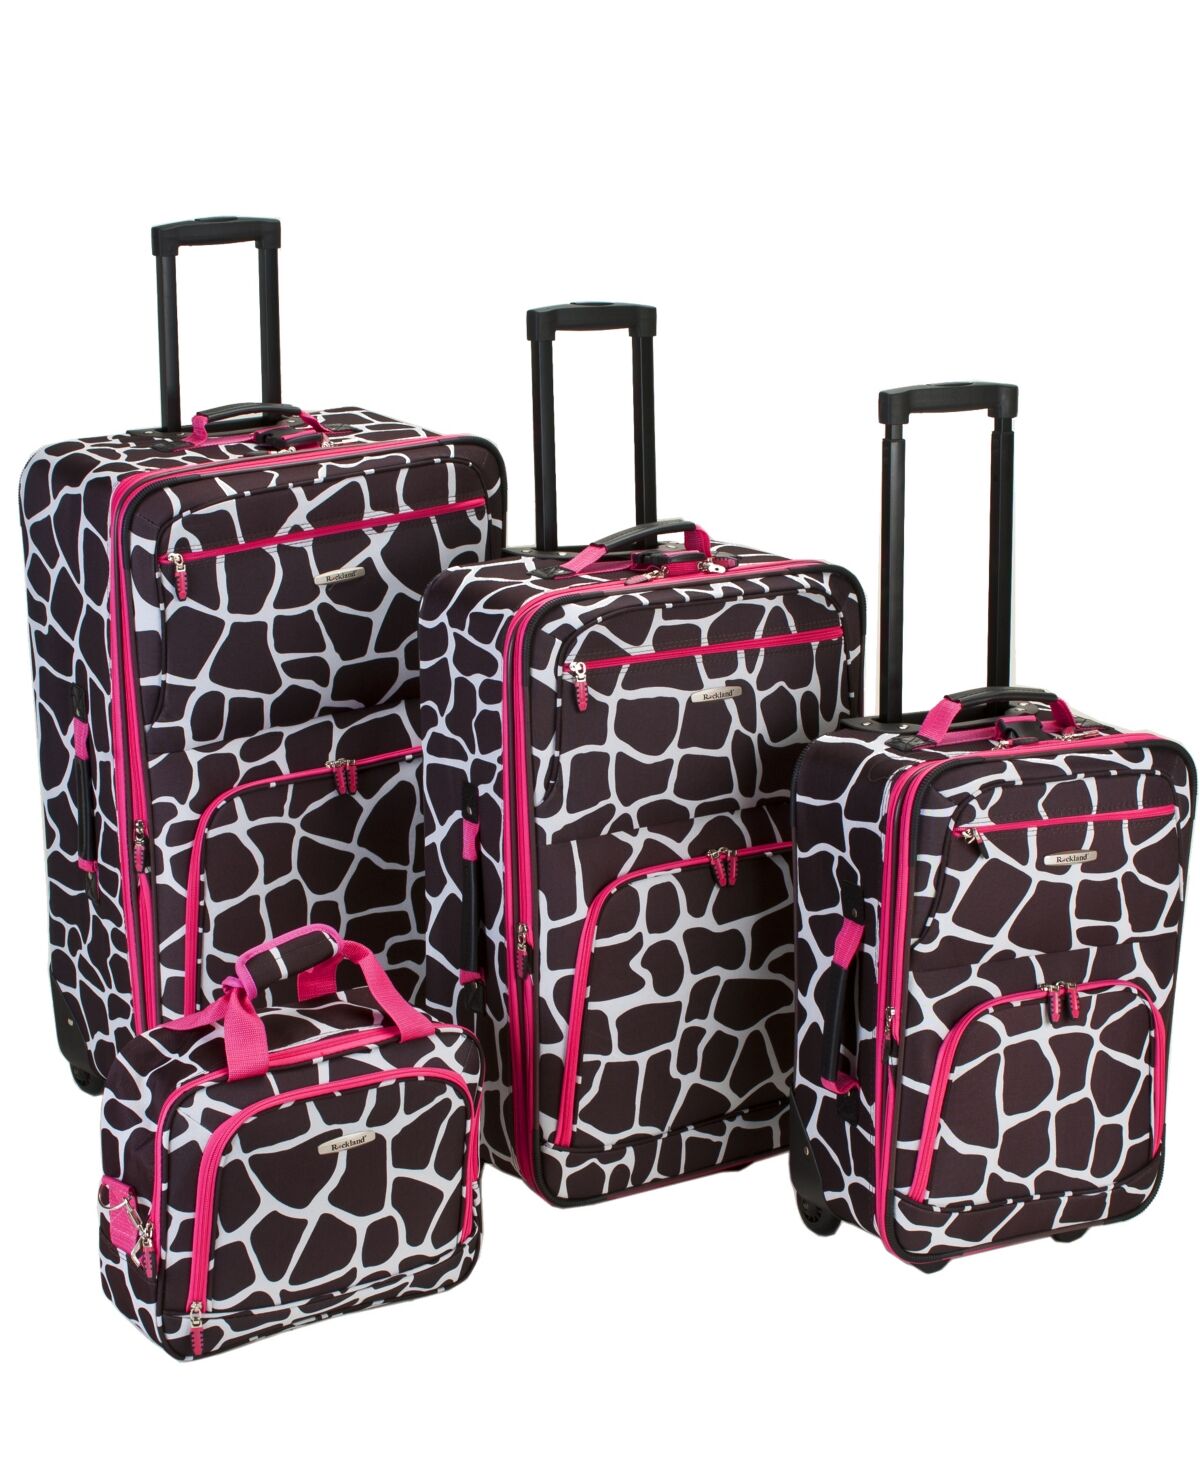 Rockland 4-Pc. Softside Luggage Set - Giraffe with Pink Trim